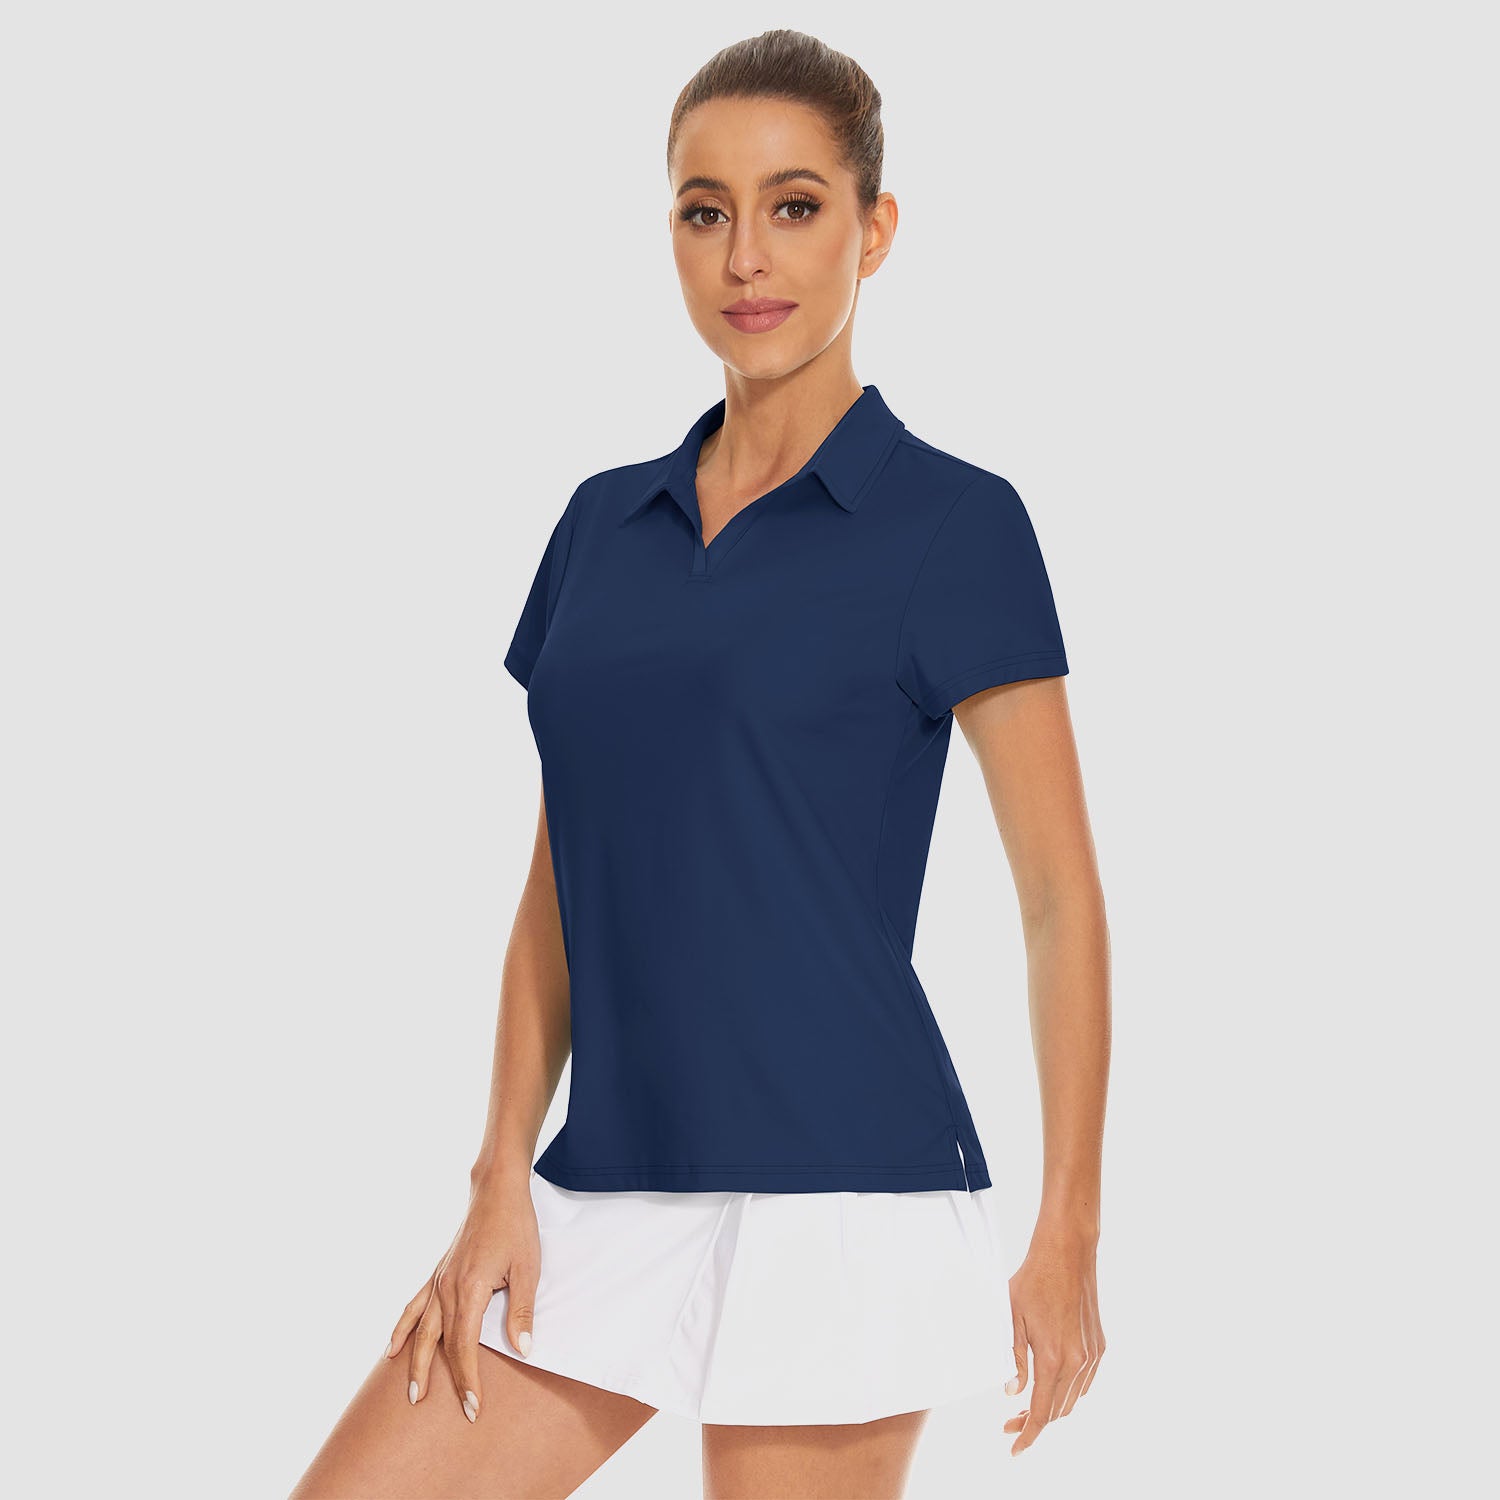 Women's Golf Polo Shirts V Neck UPF 50+ Collared Tennis Shirt Lightweight Quick Dry